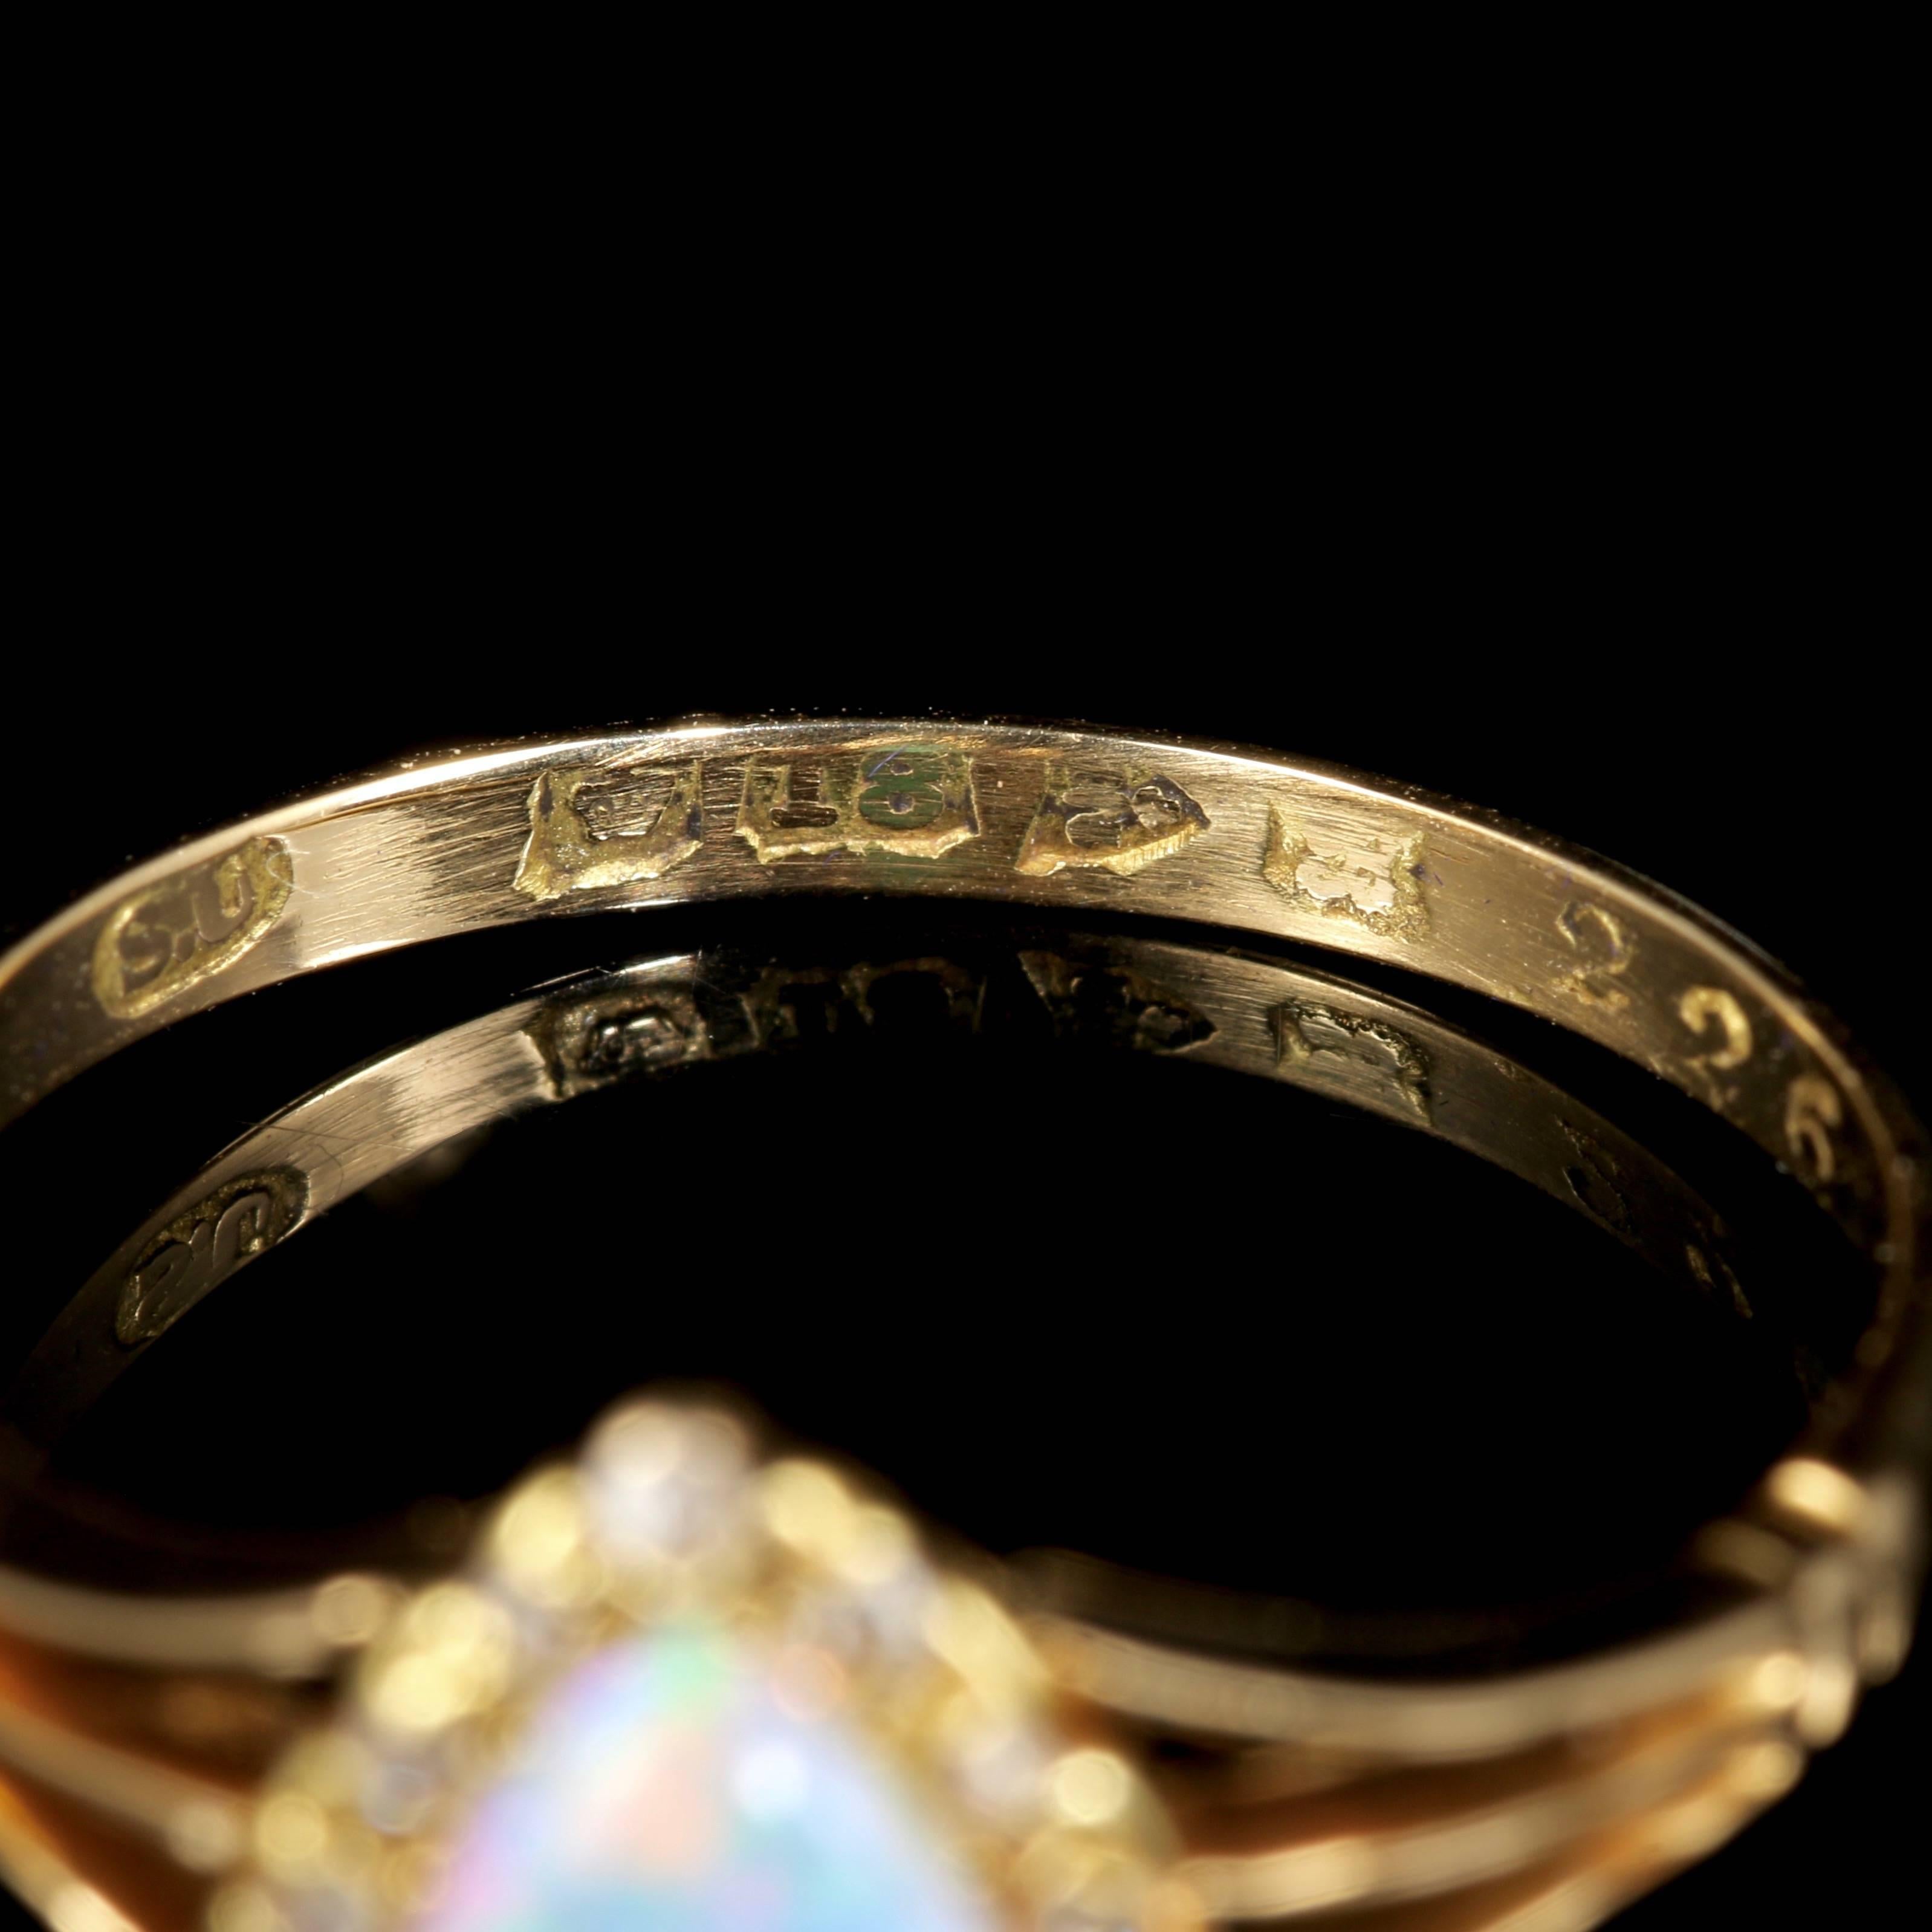 Antique Edwardian Opal Diamond Heart Ring 18 Carat in Original Heart Box, 1908 2